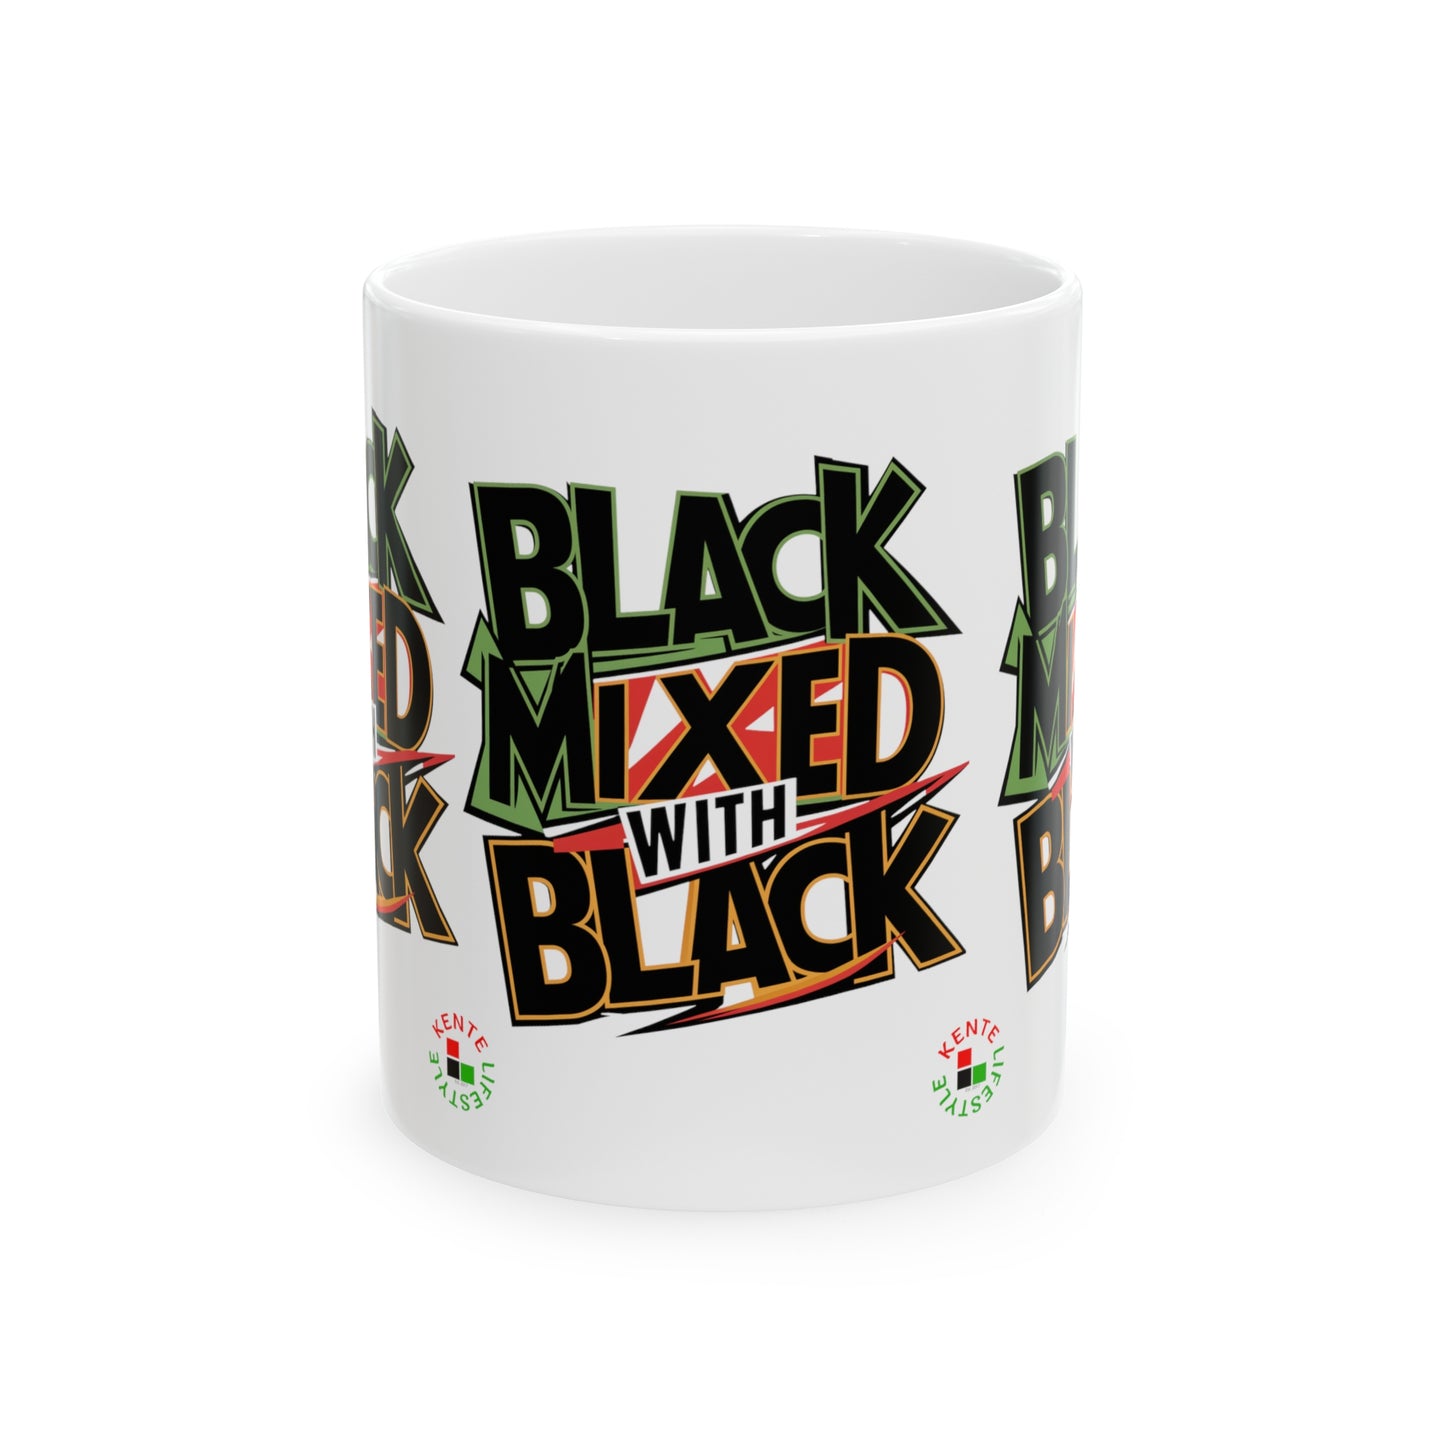 "Black Mixed with Black" - Ceramic Mug 11oz